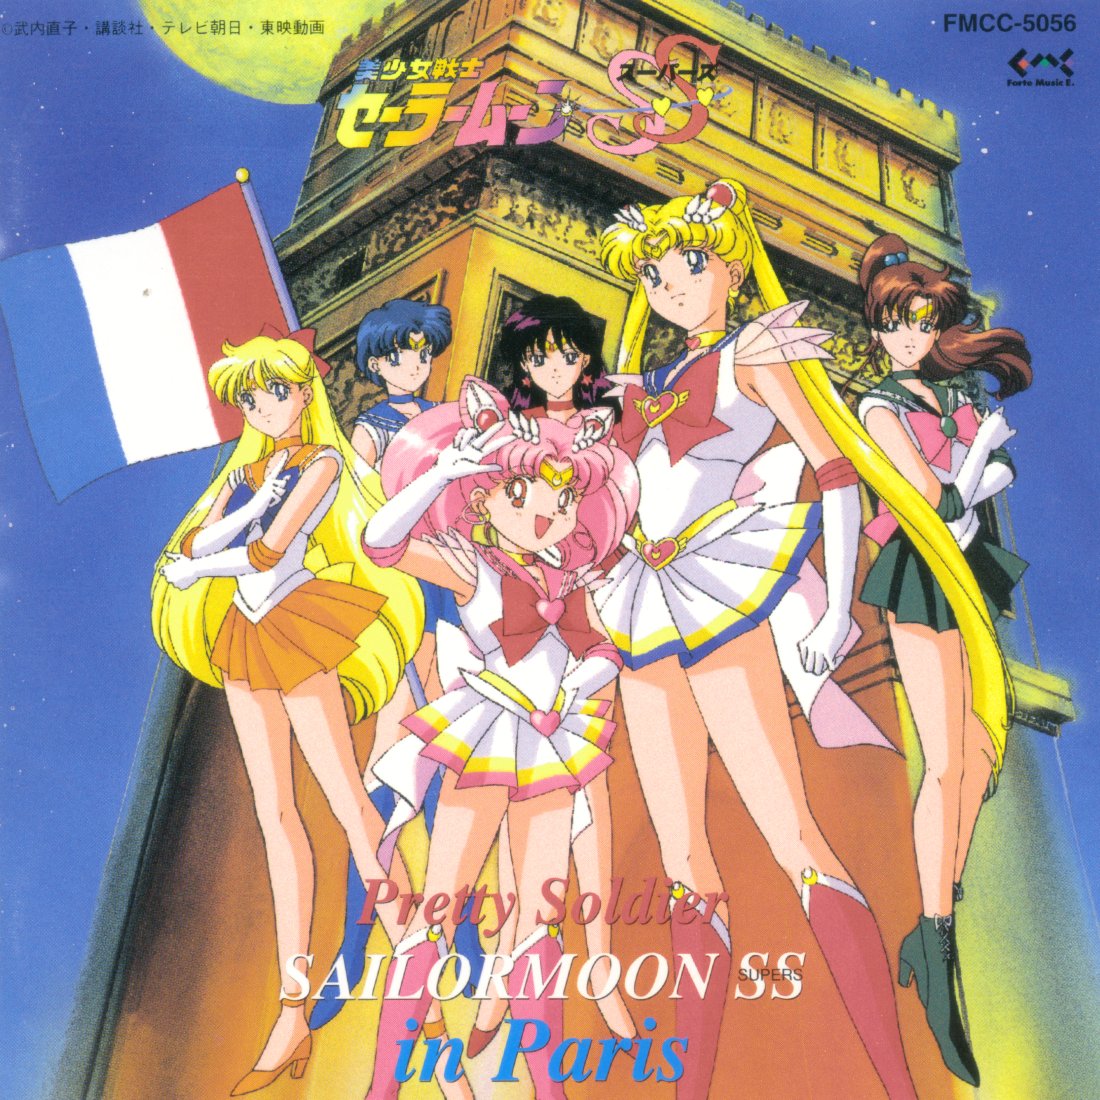 Sailor Moon S #5